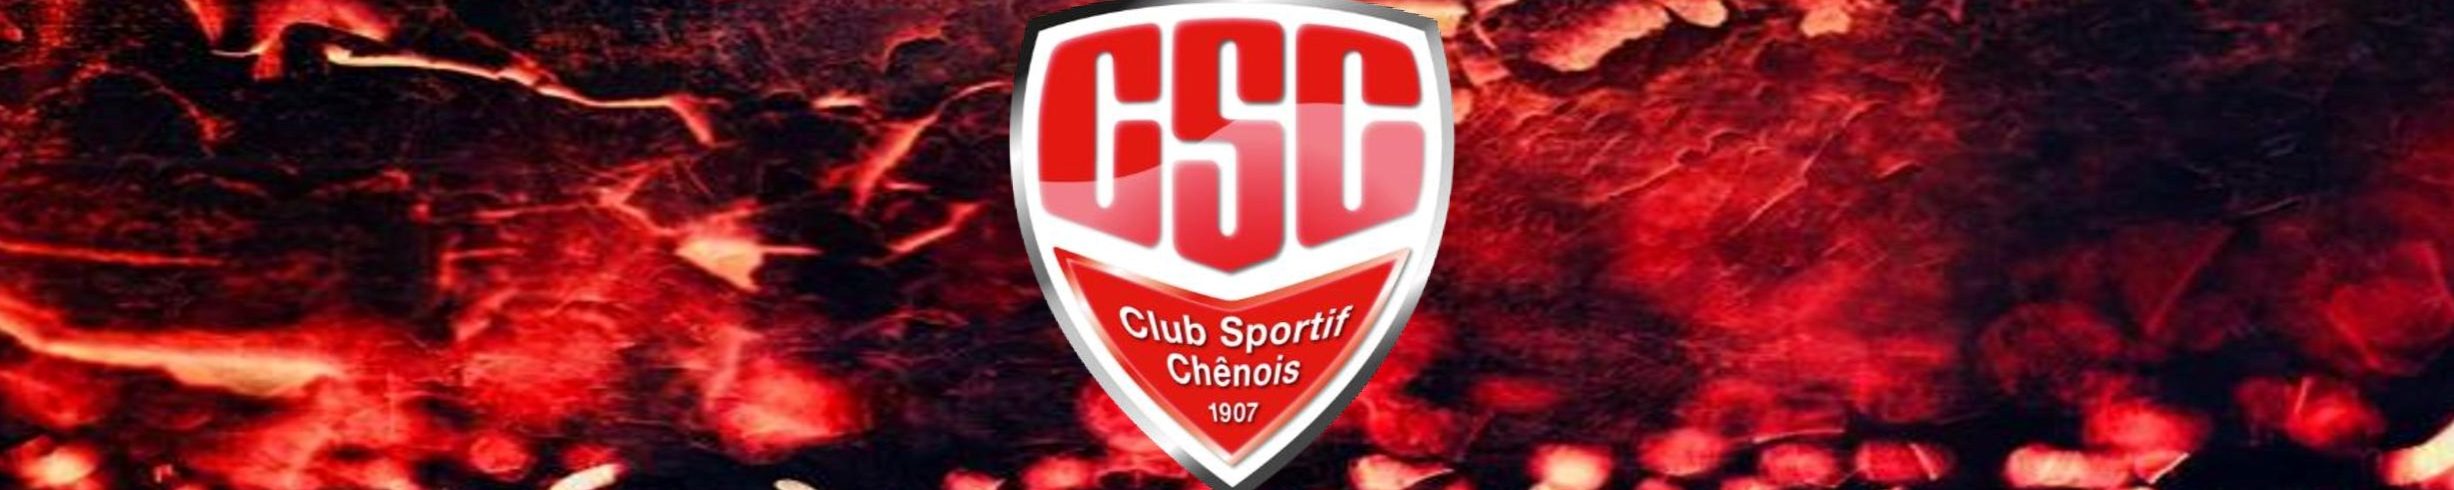 CLUB SPORTIF CHENOIS – 1907